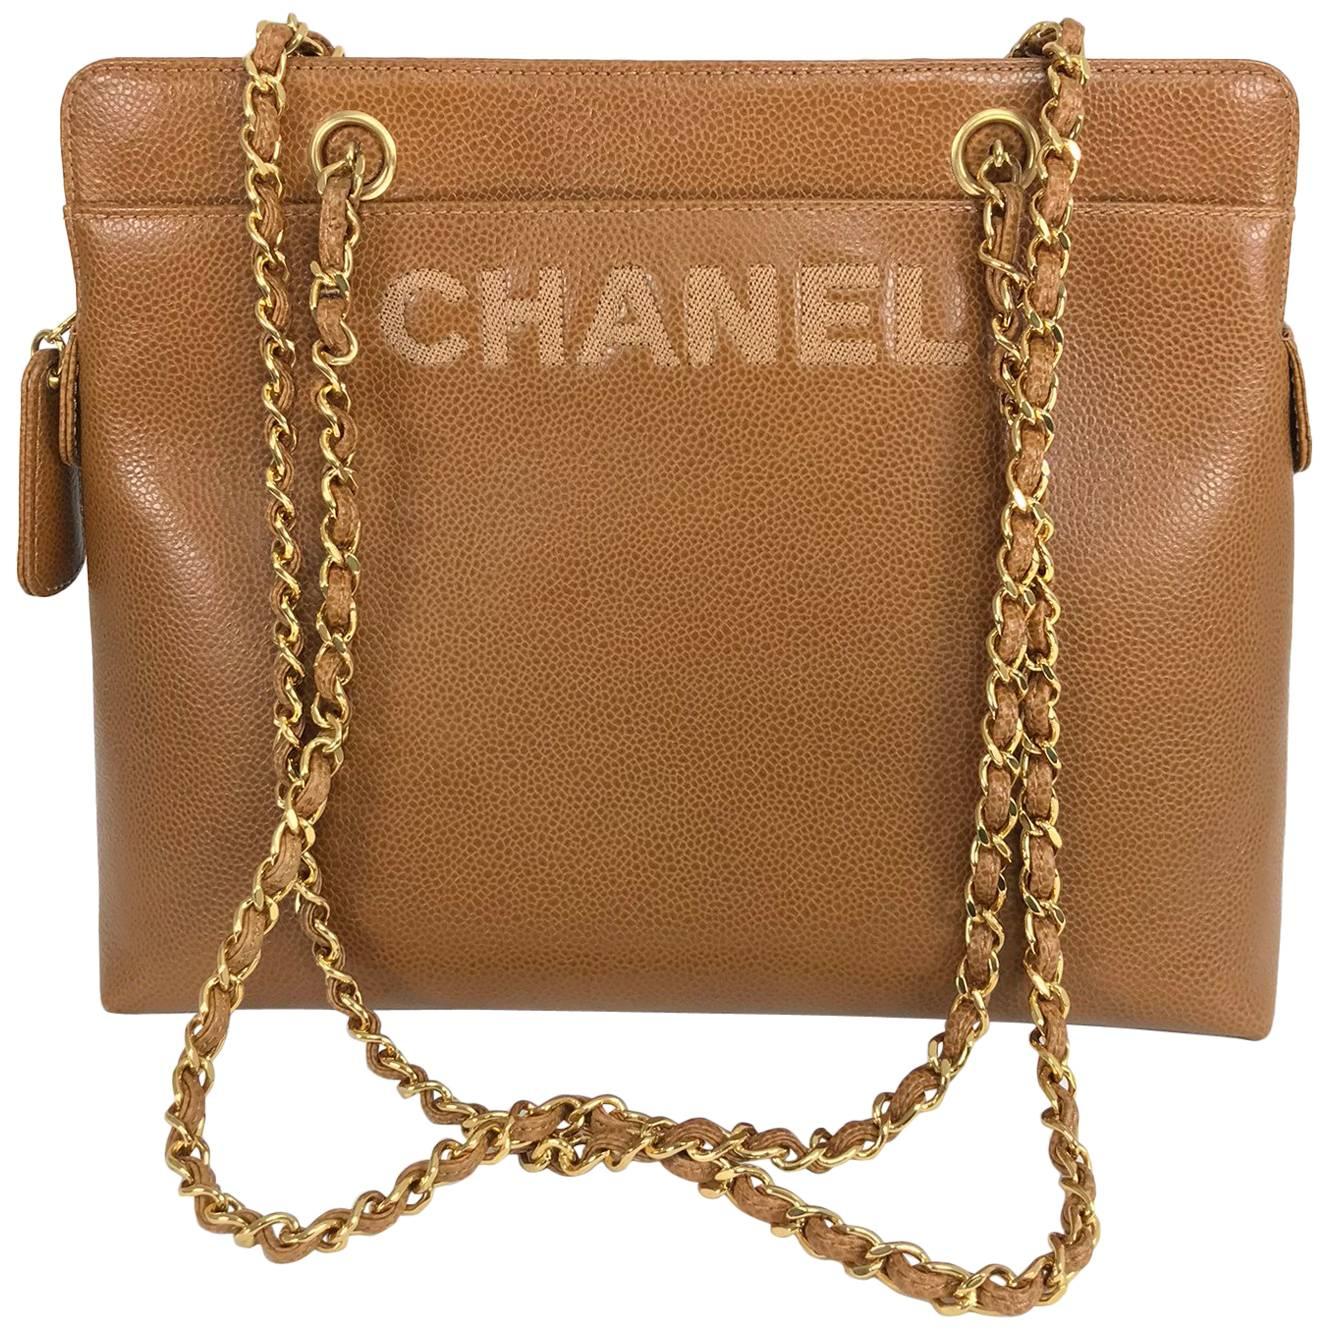 Chanel caramel pebble leather chain strap shoulder bag unused